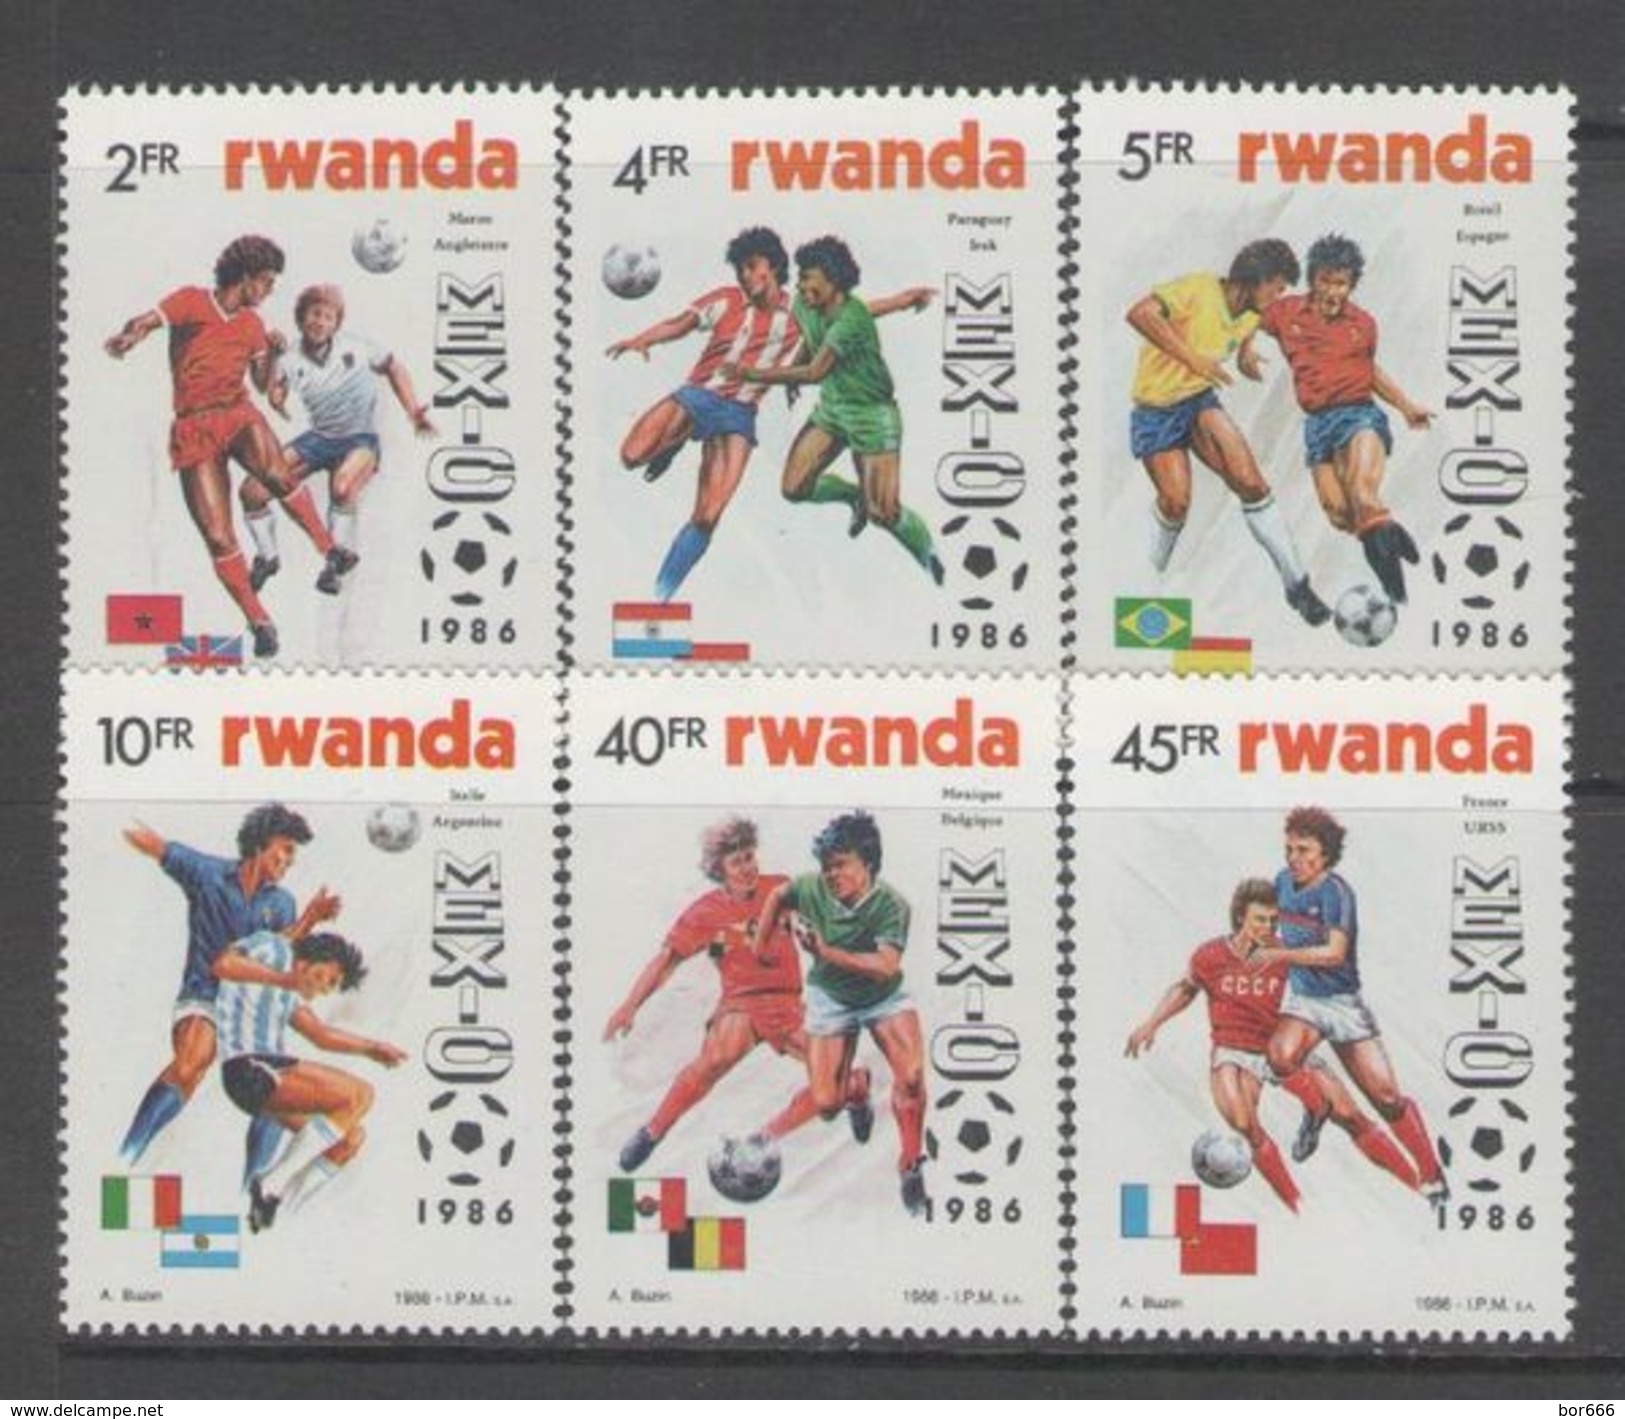 Rwanda - SOCCER / FOOTBALL 1986 MNH - Unused Stamps